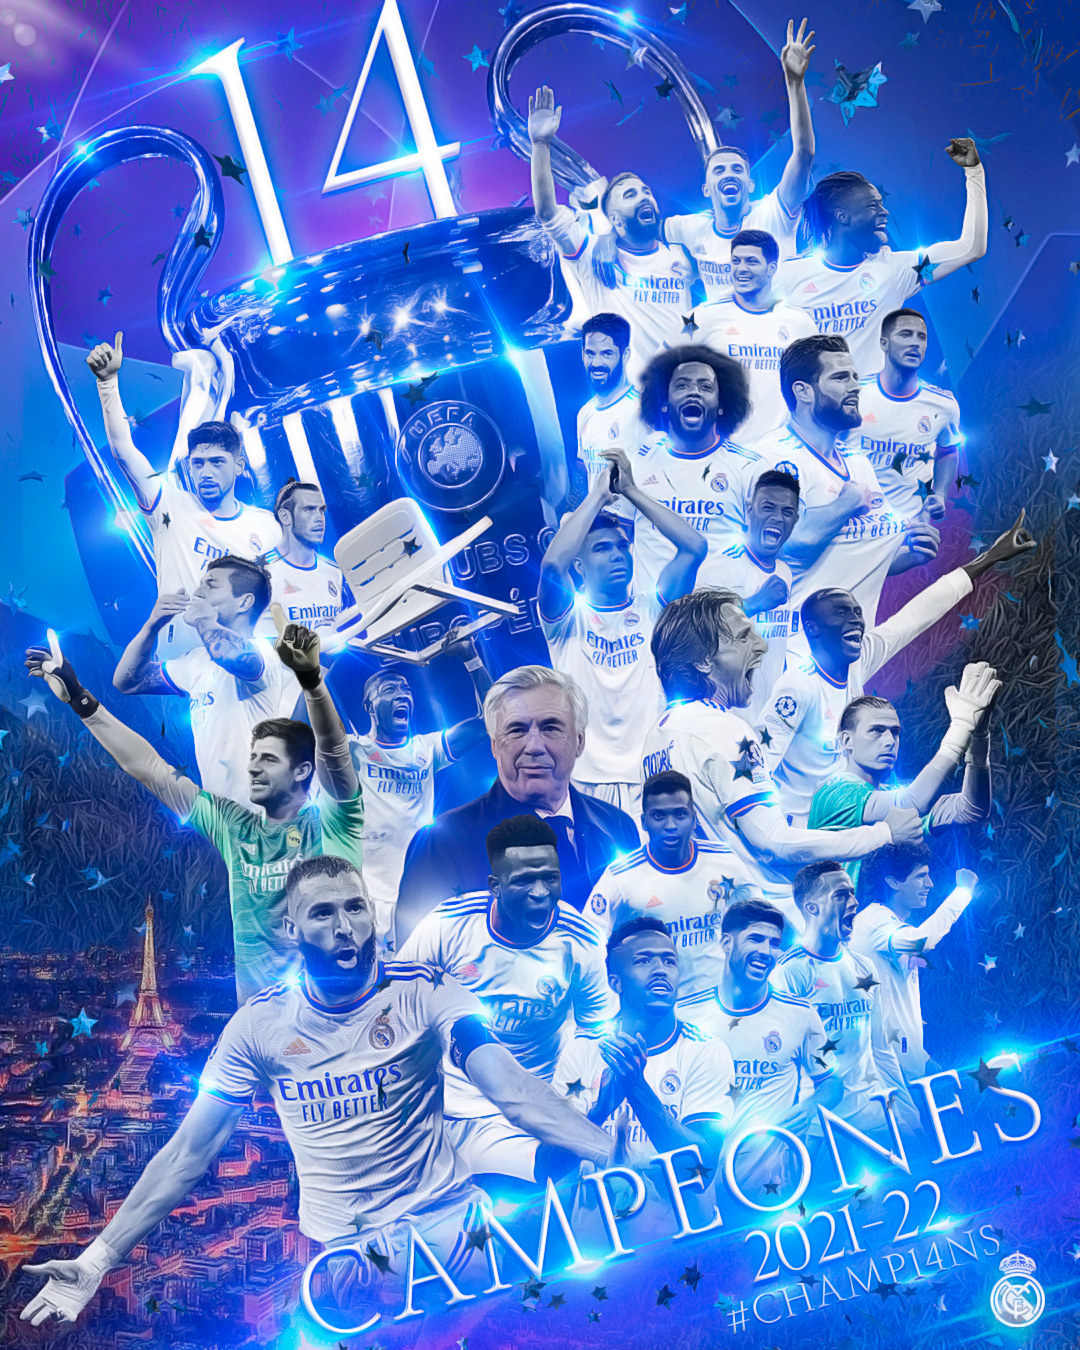 Le Real Madrid remporte sa 14e League des champions